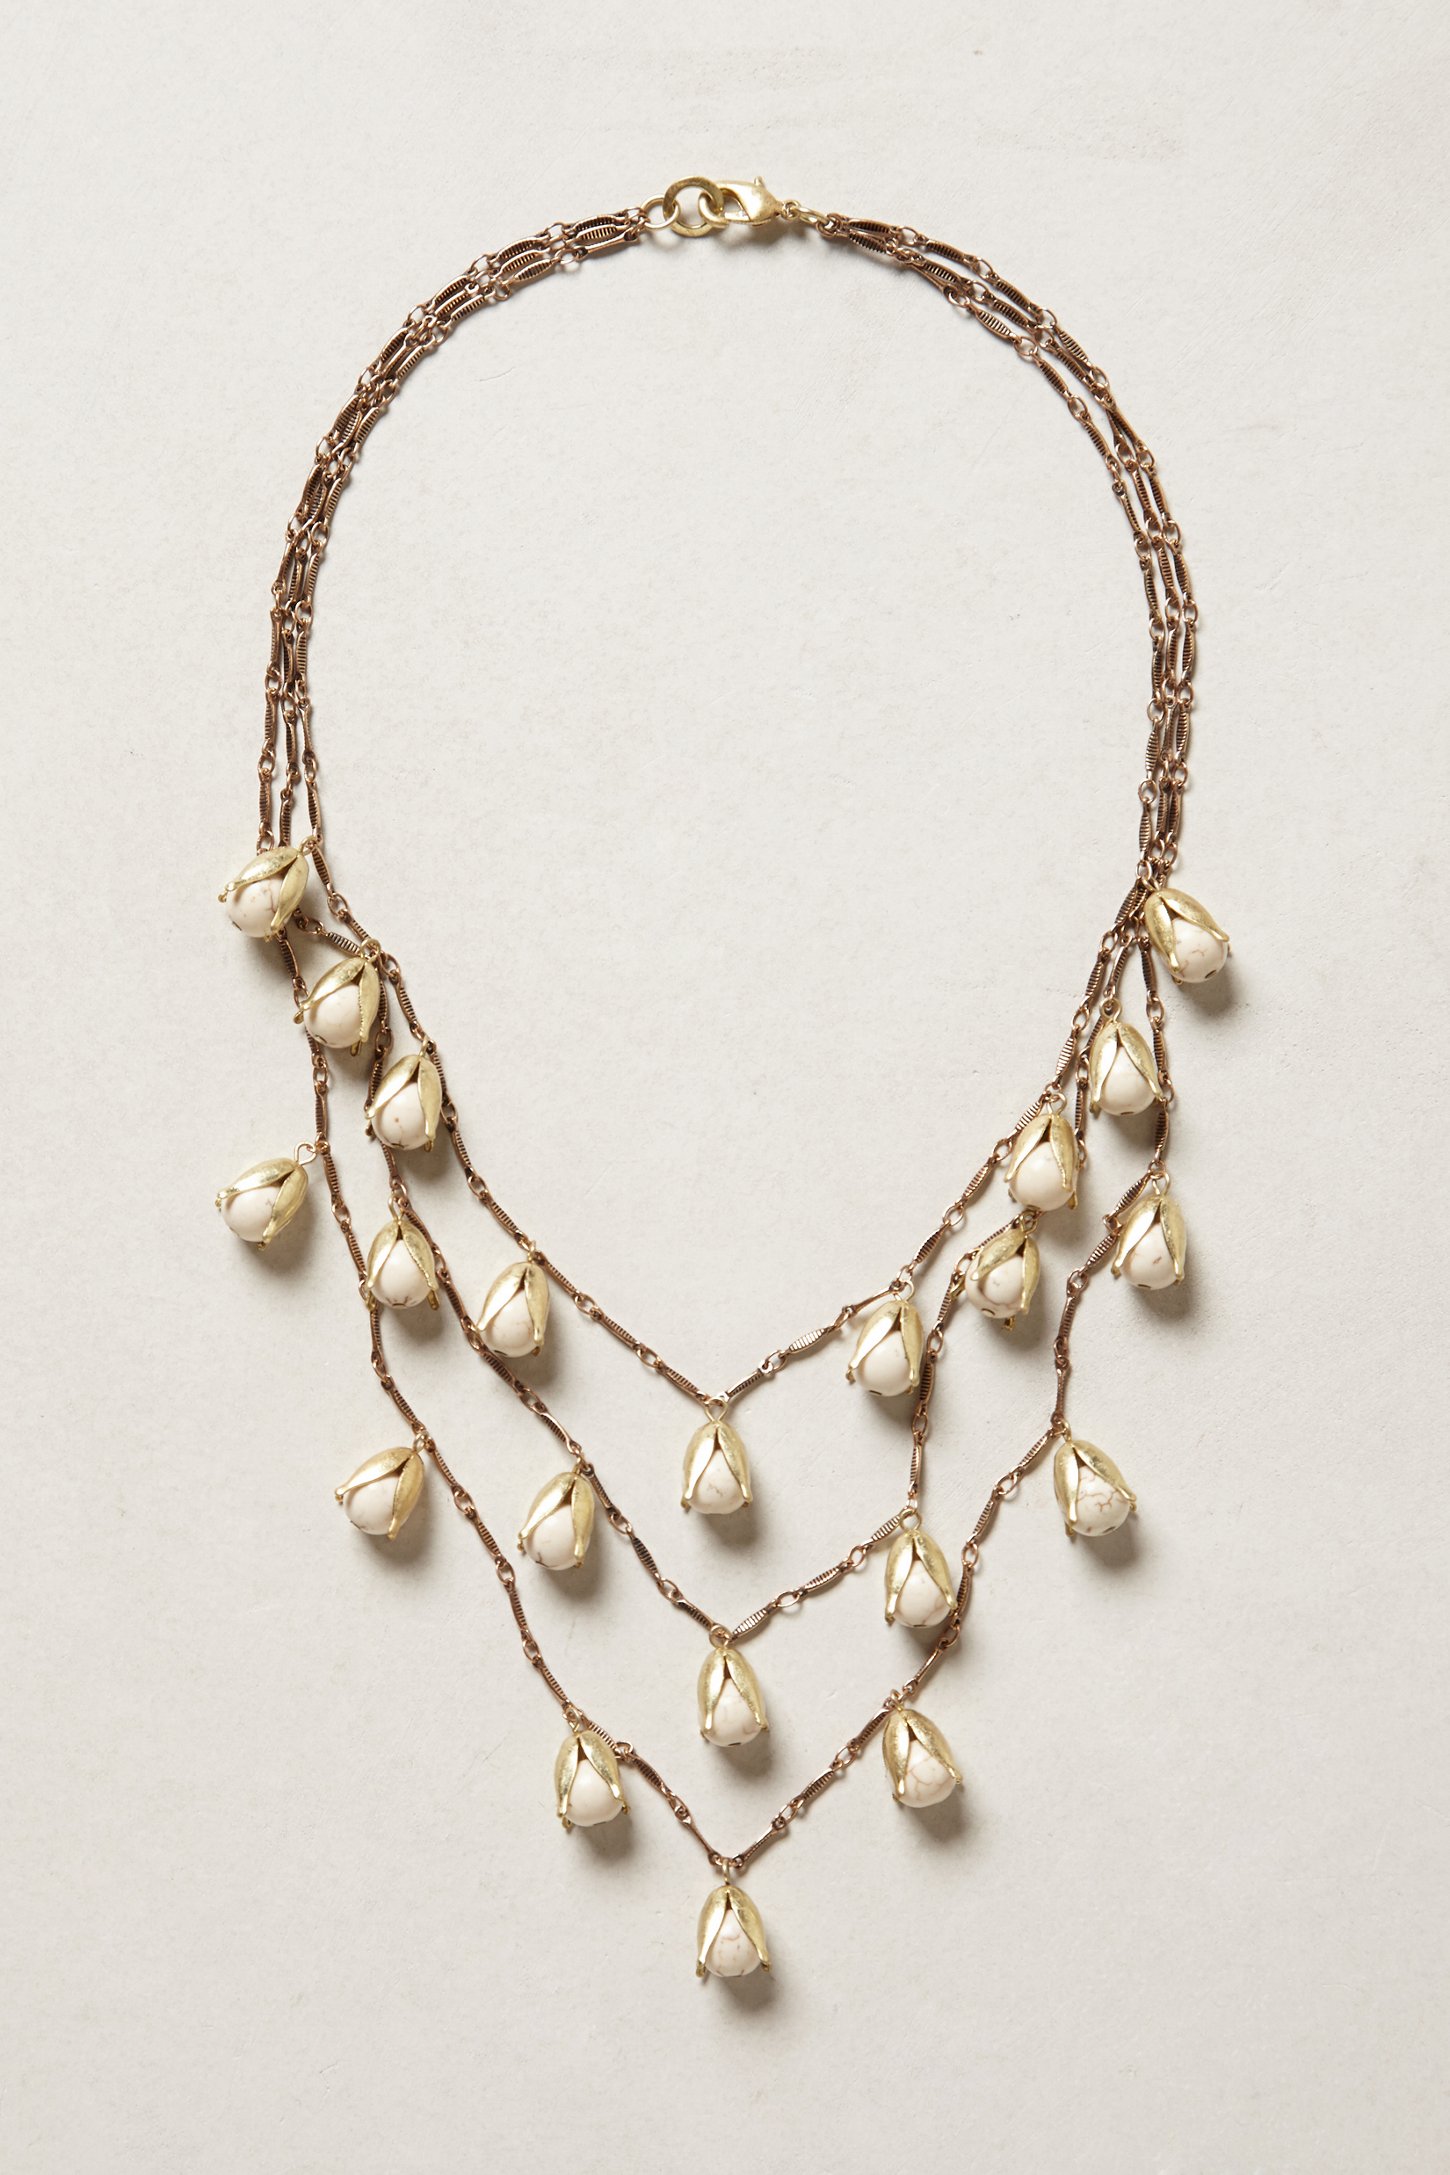 Lyst - Anthropologie Elemental Necklace in White